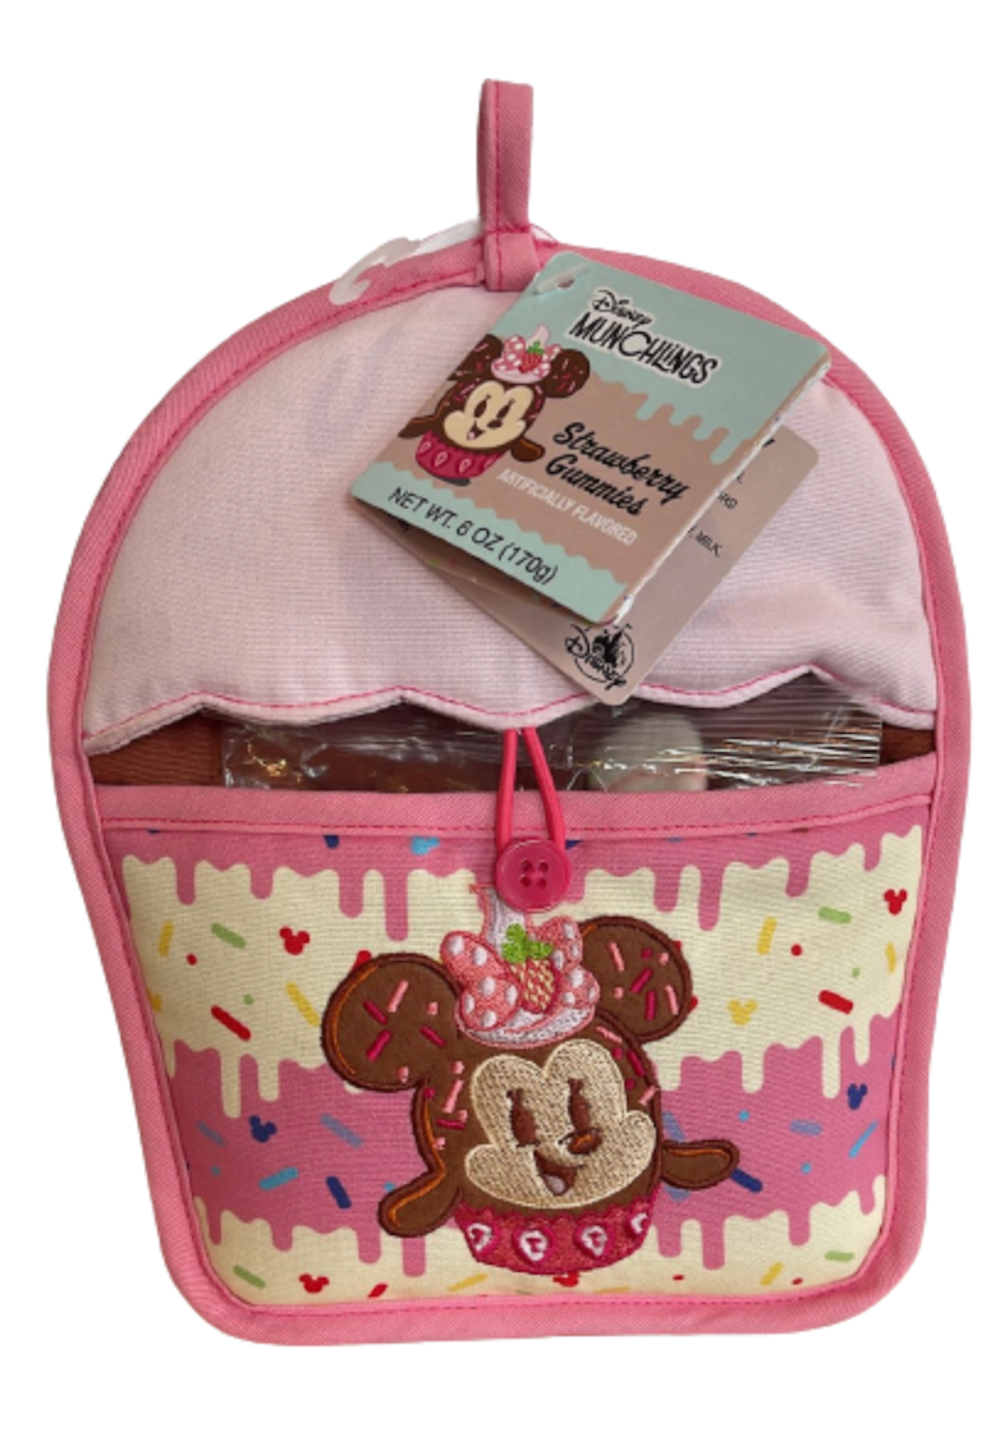 Disney Parks Munchlings Minnie Pot Holder with Strawberry Gummies 6oz New w Tag